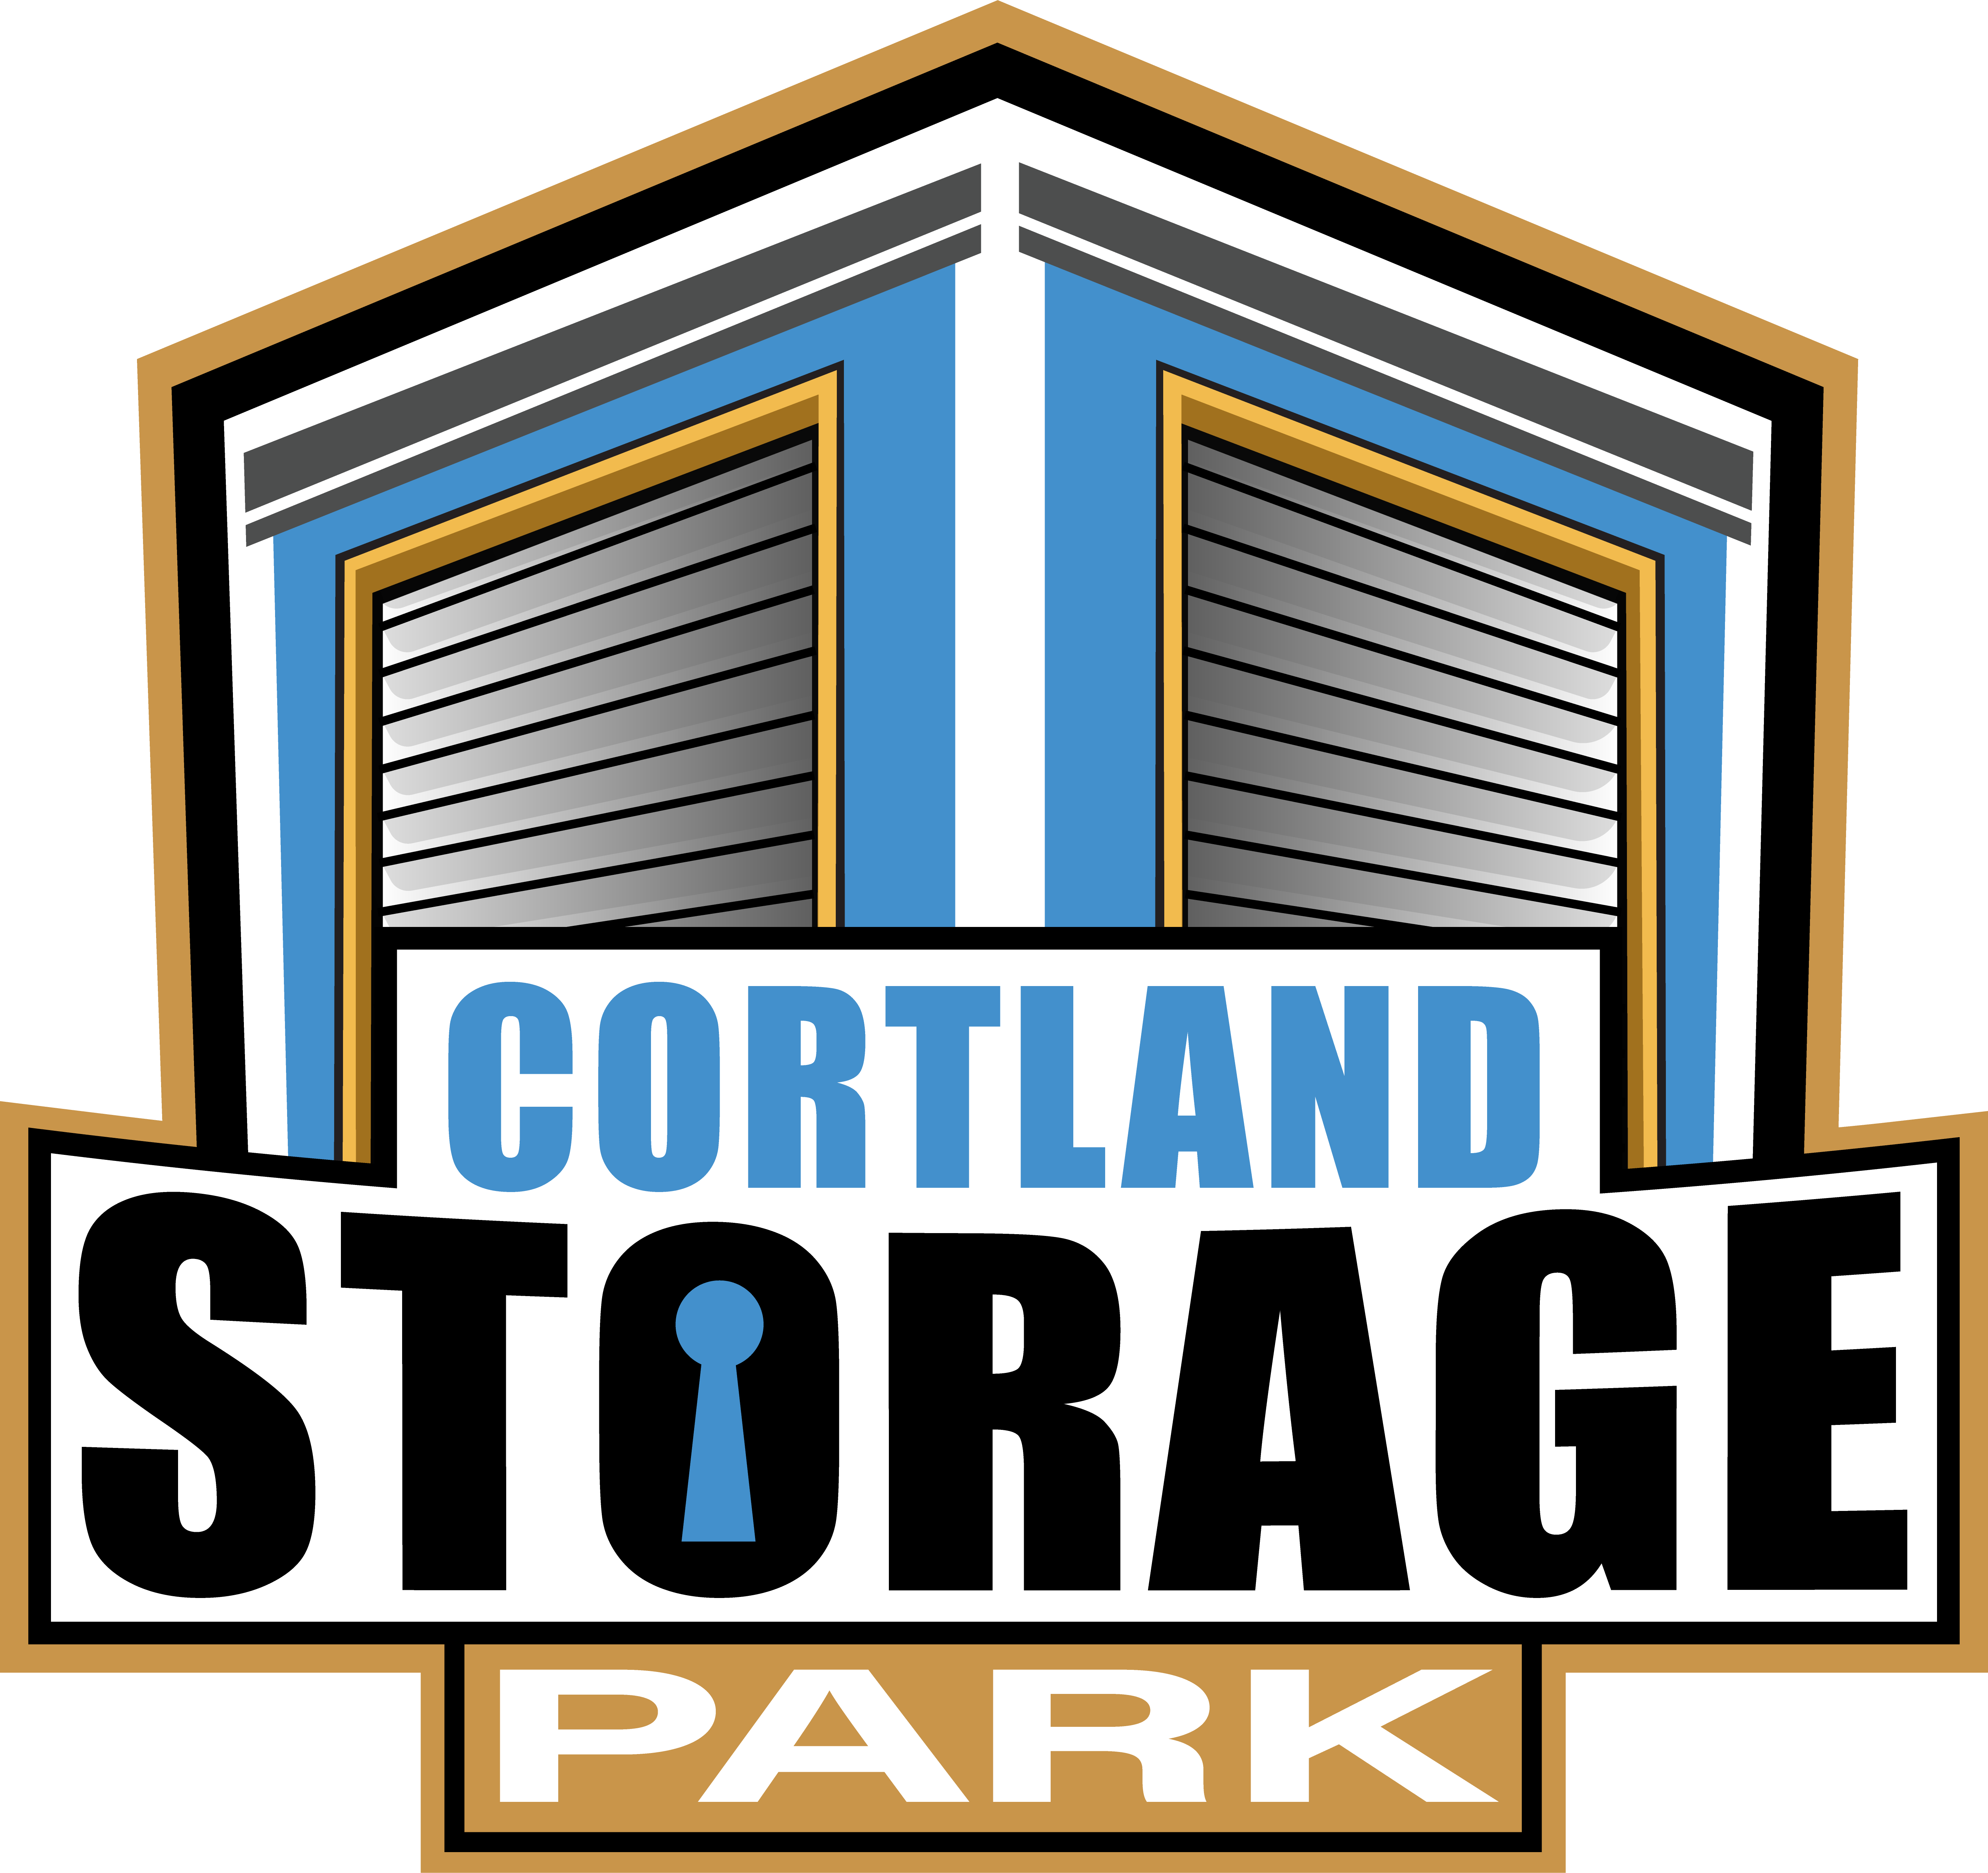 Cortland Storage Park